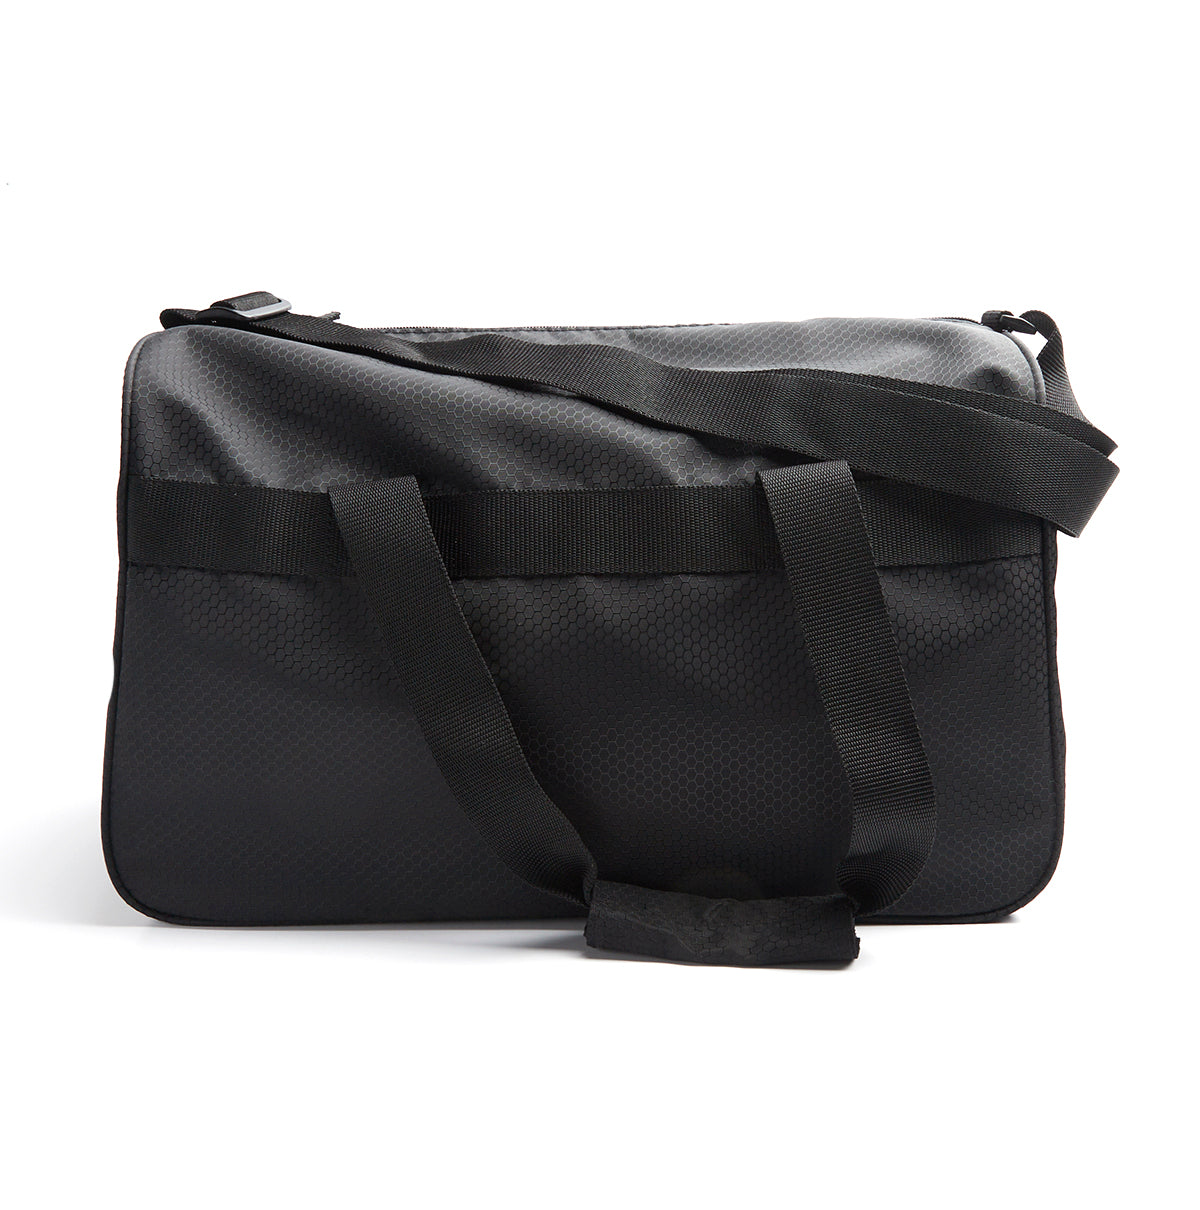 Reebok Duffle Bag Gym Bag Black Gray Travel Bag Carry On | eBay